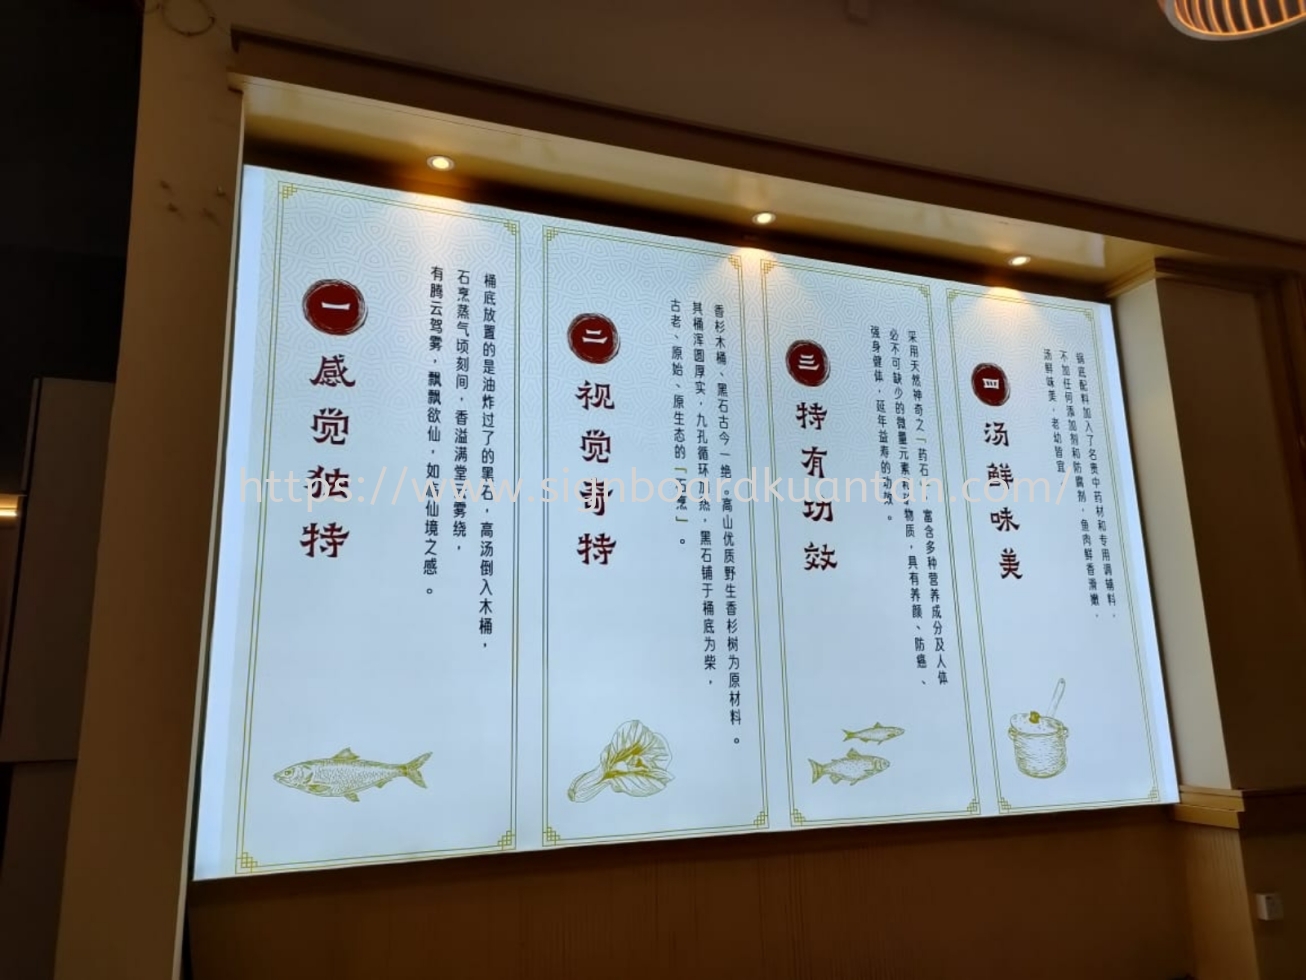 XU ZHUANG FISH STEAMBOAT INKJET WALLPAPER PRINTING AT TERMELOH 